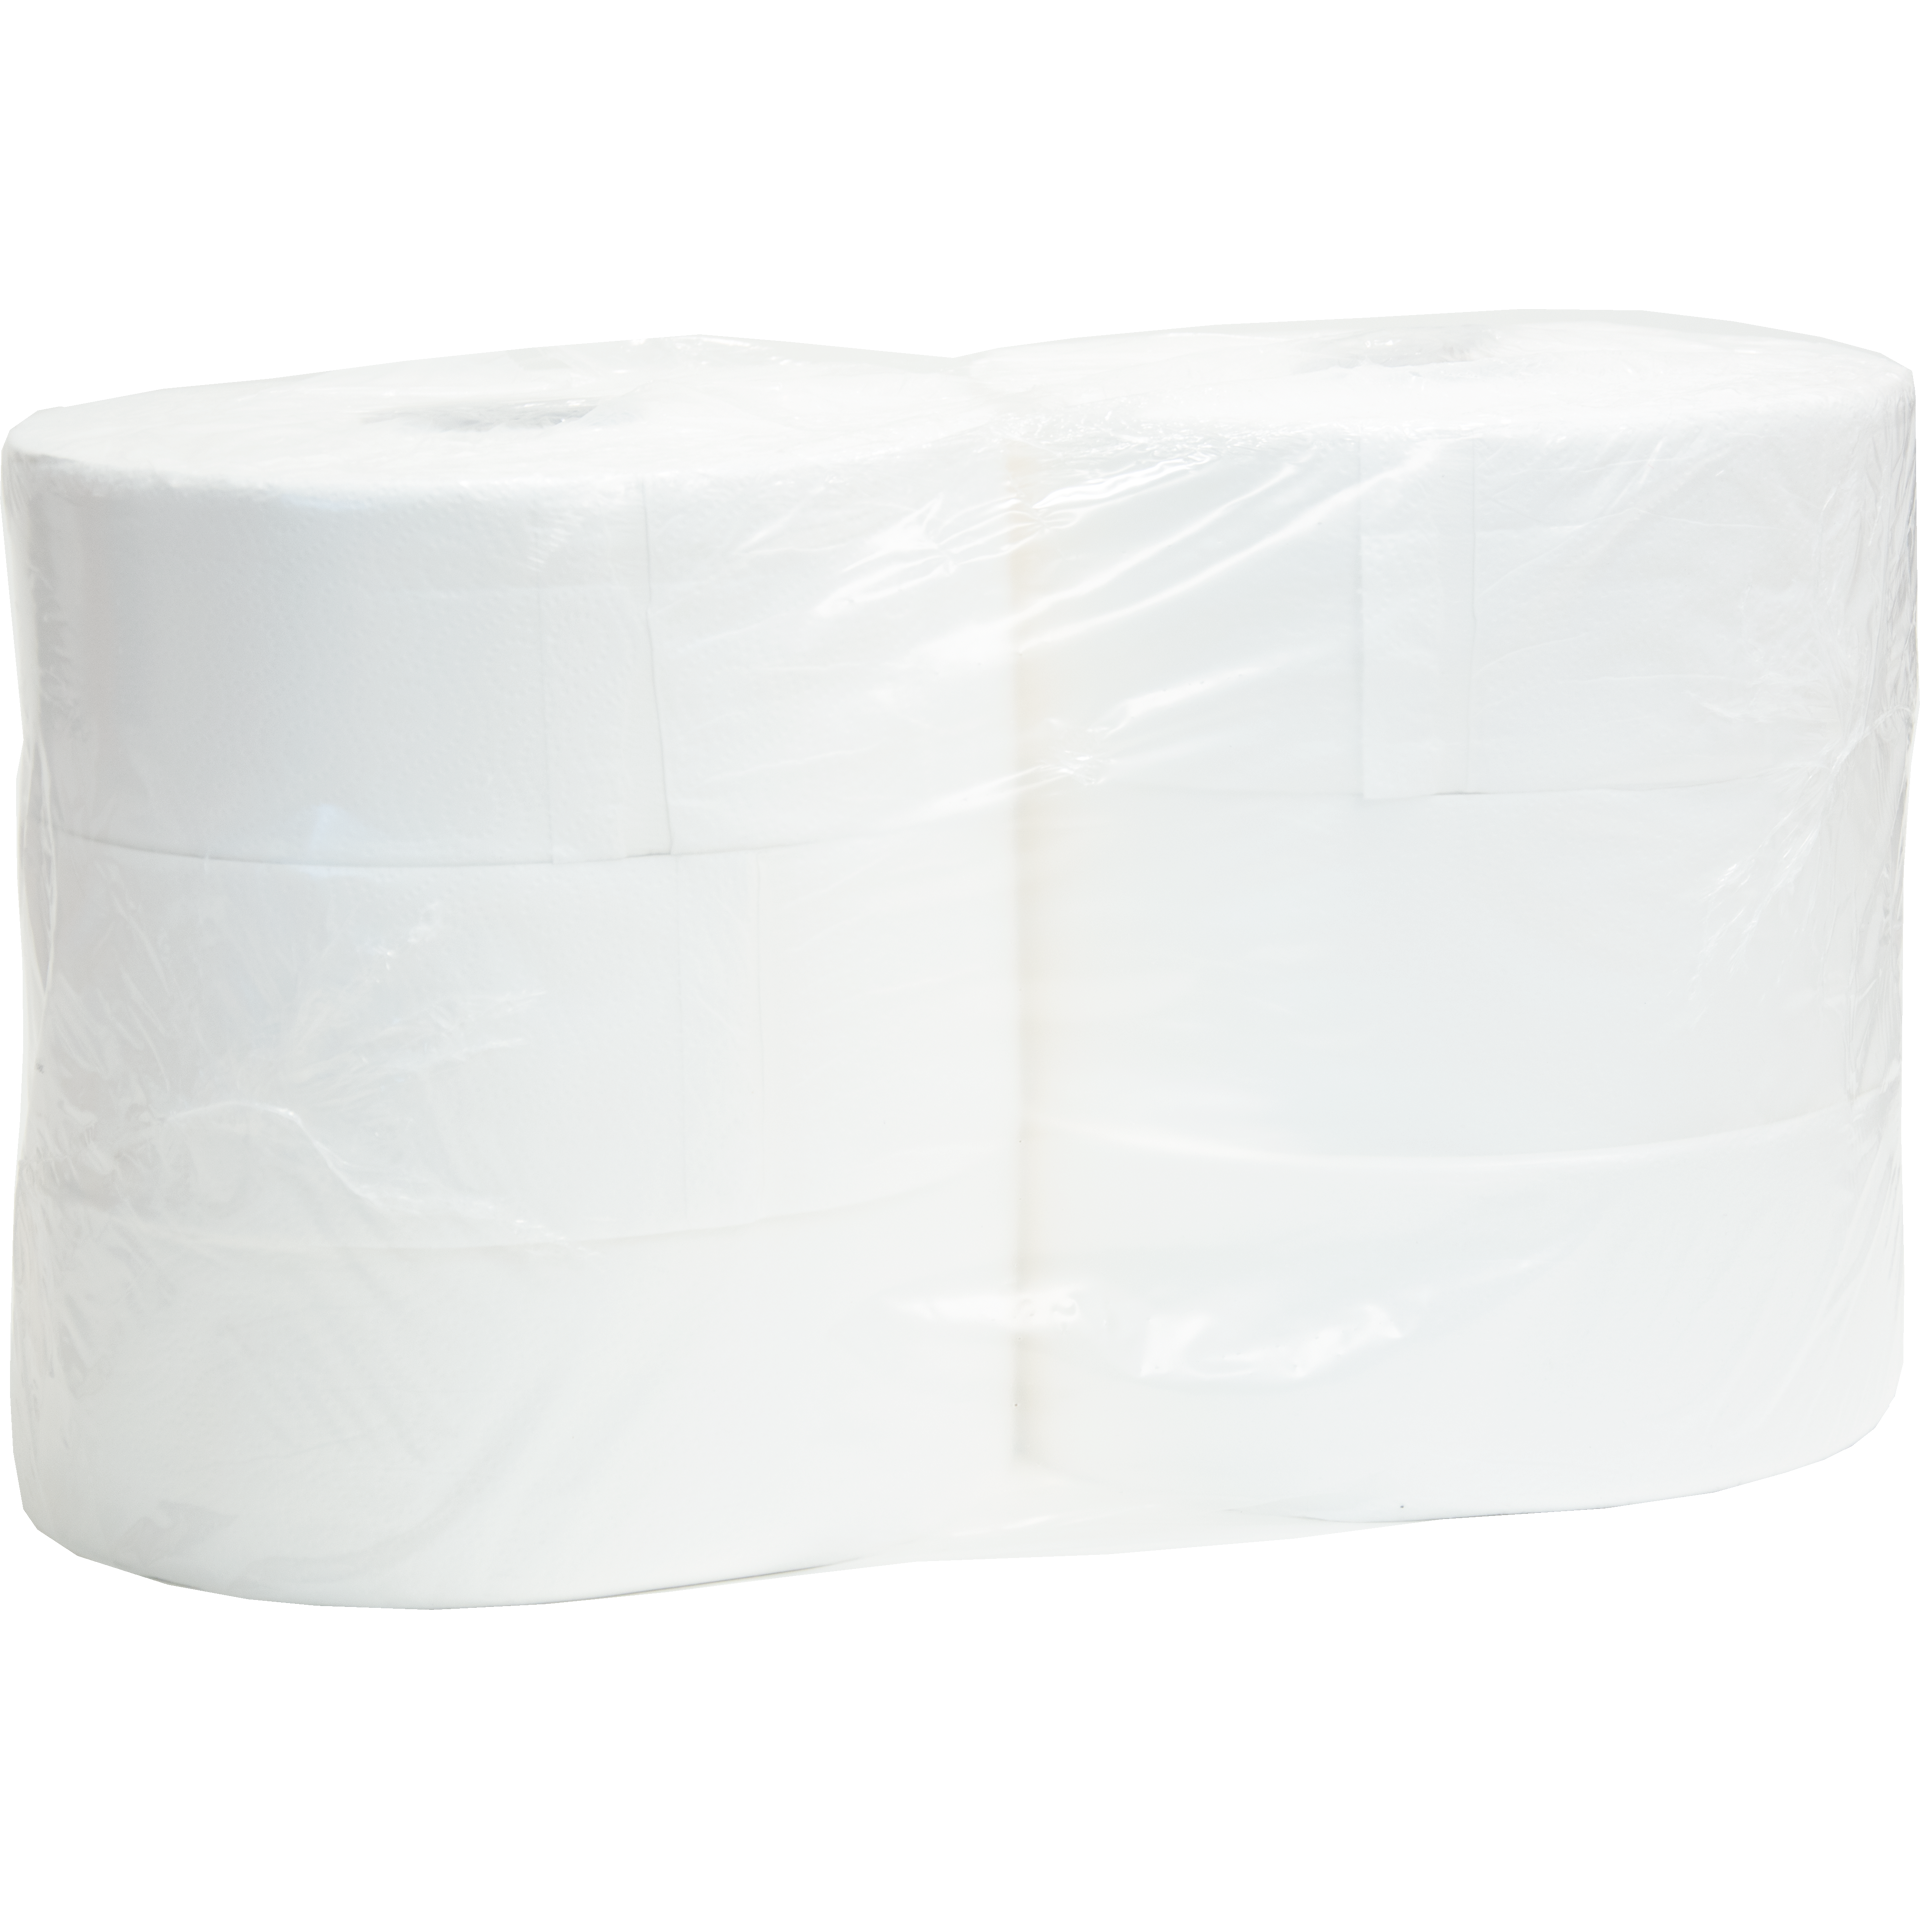 Toilettenpapier | Jumbo weiß 2lg. 840 Abrisse/38 cm 